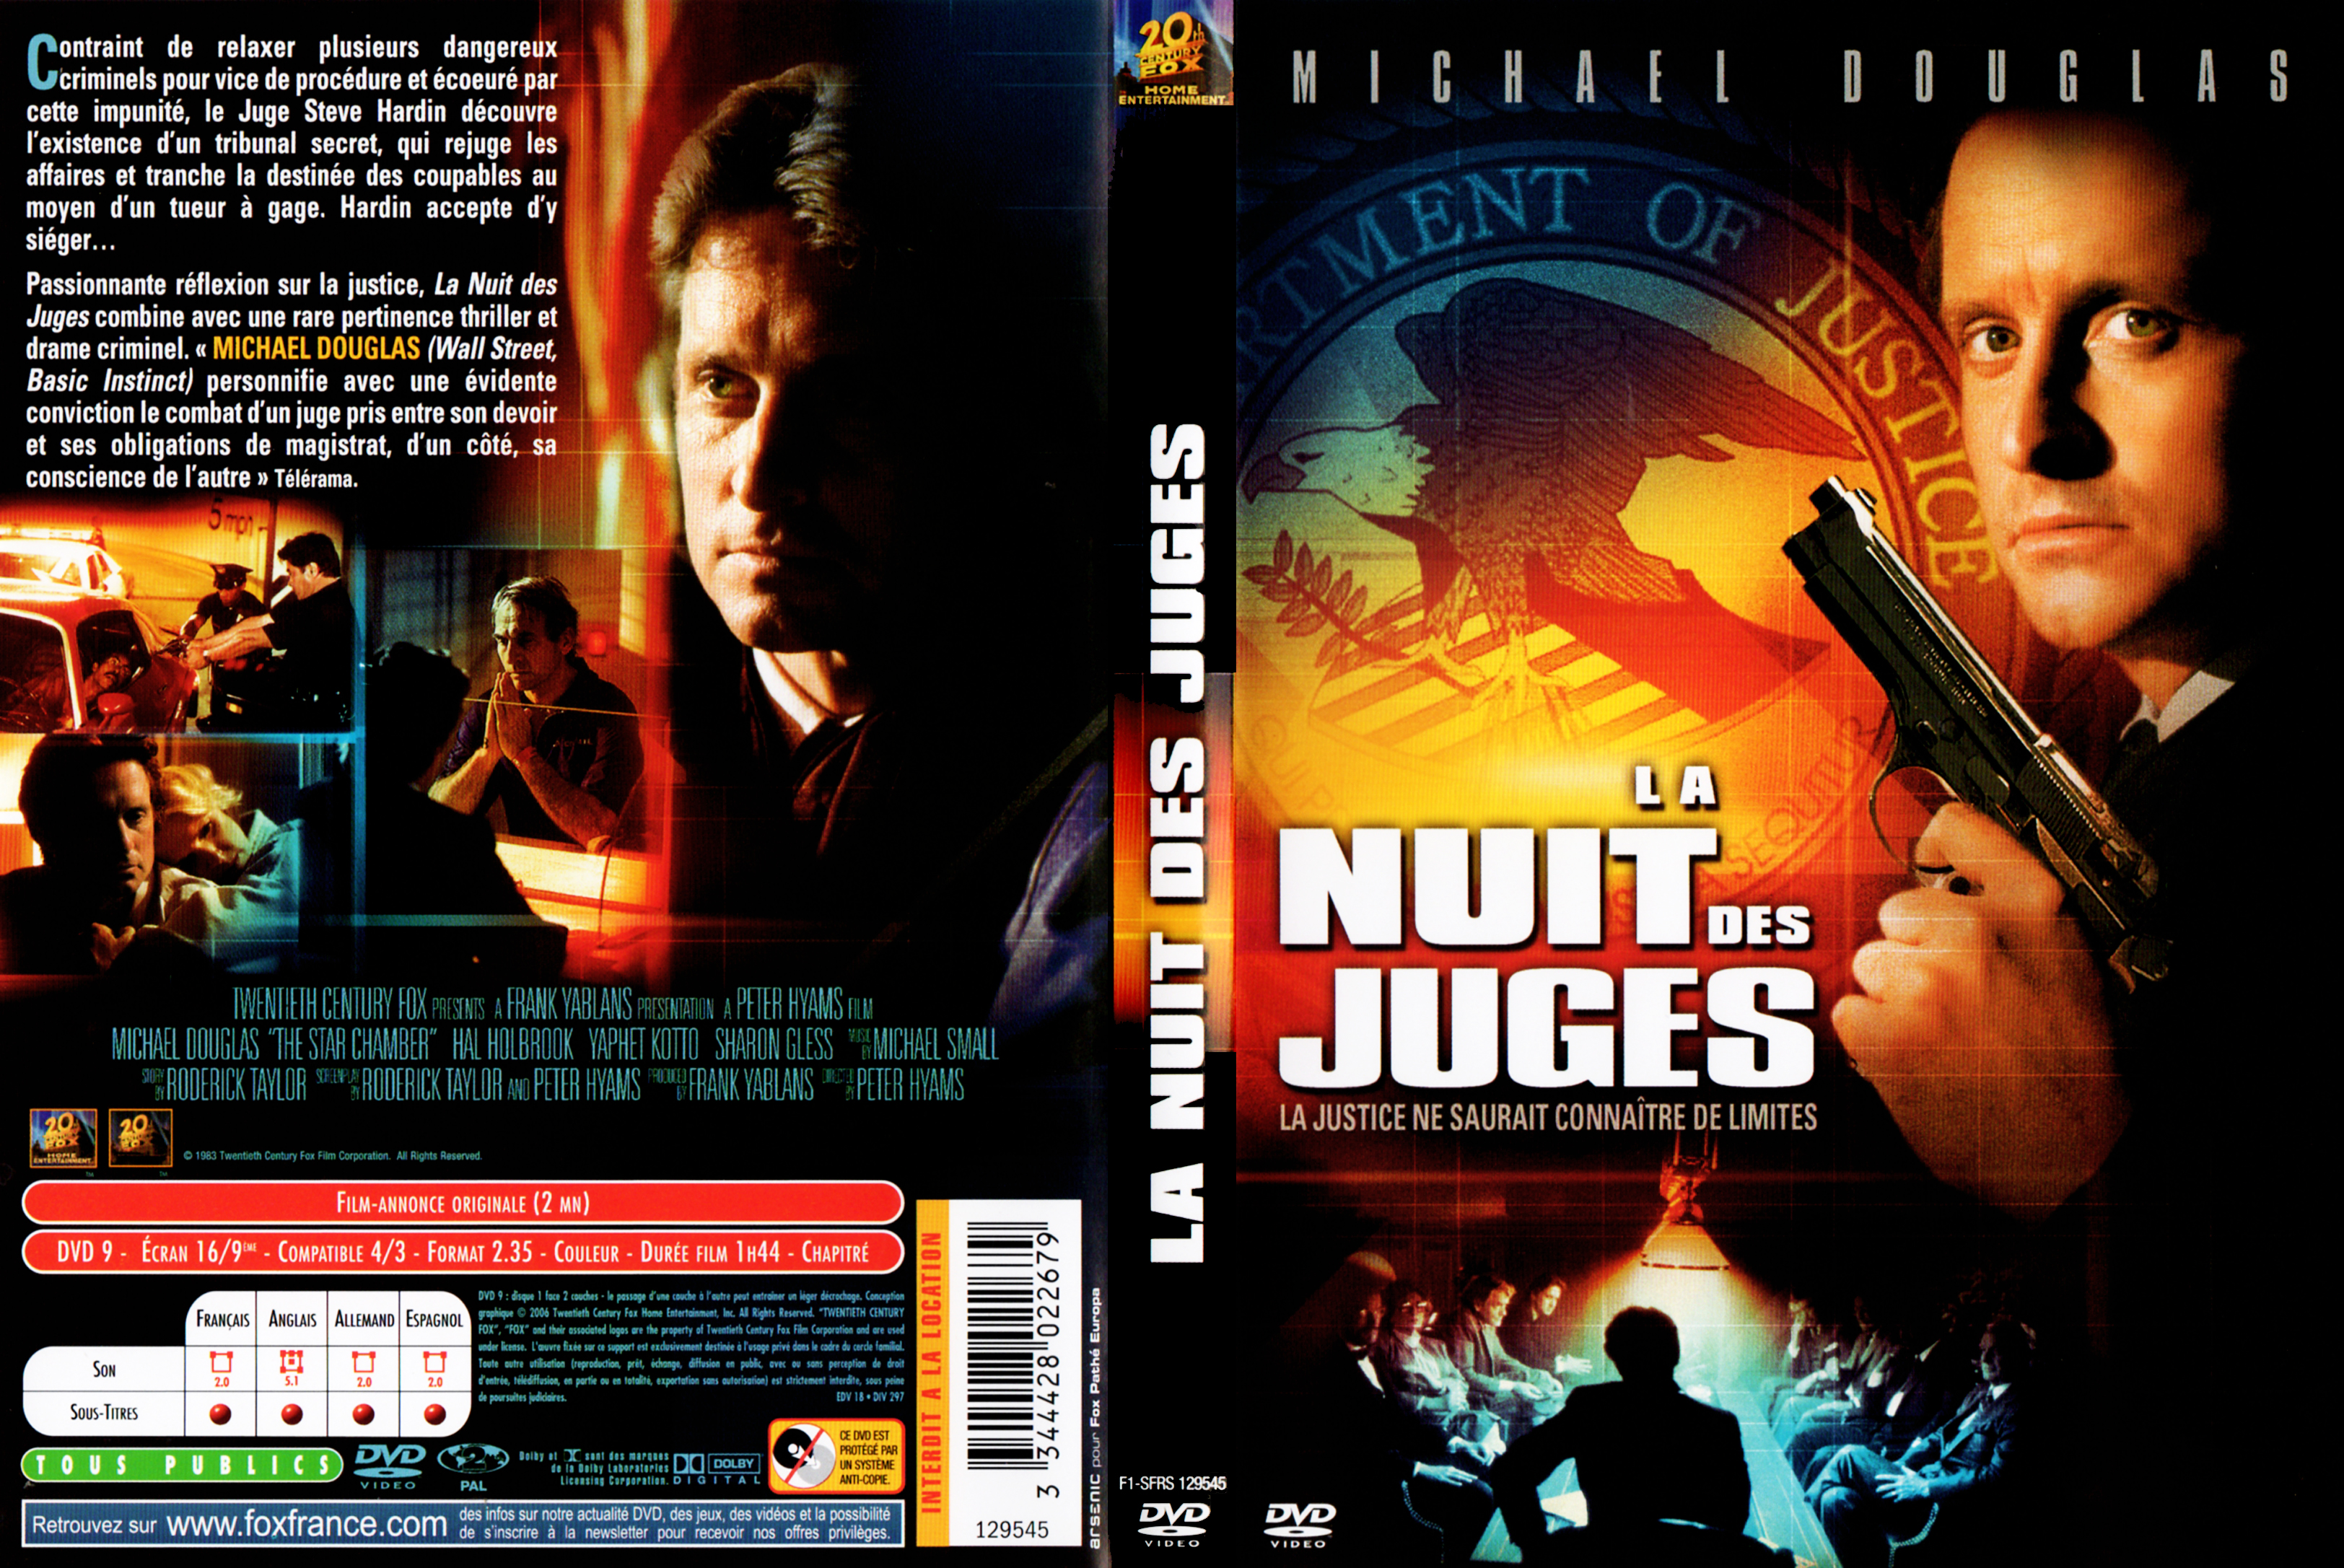 Jaquette DVD La nuit des juges v2